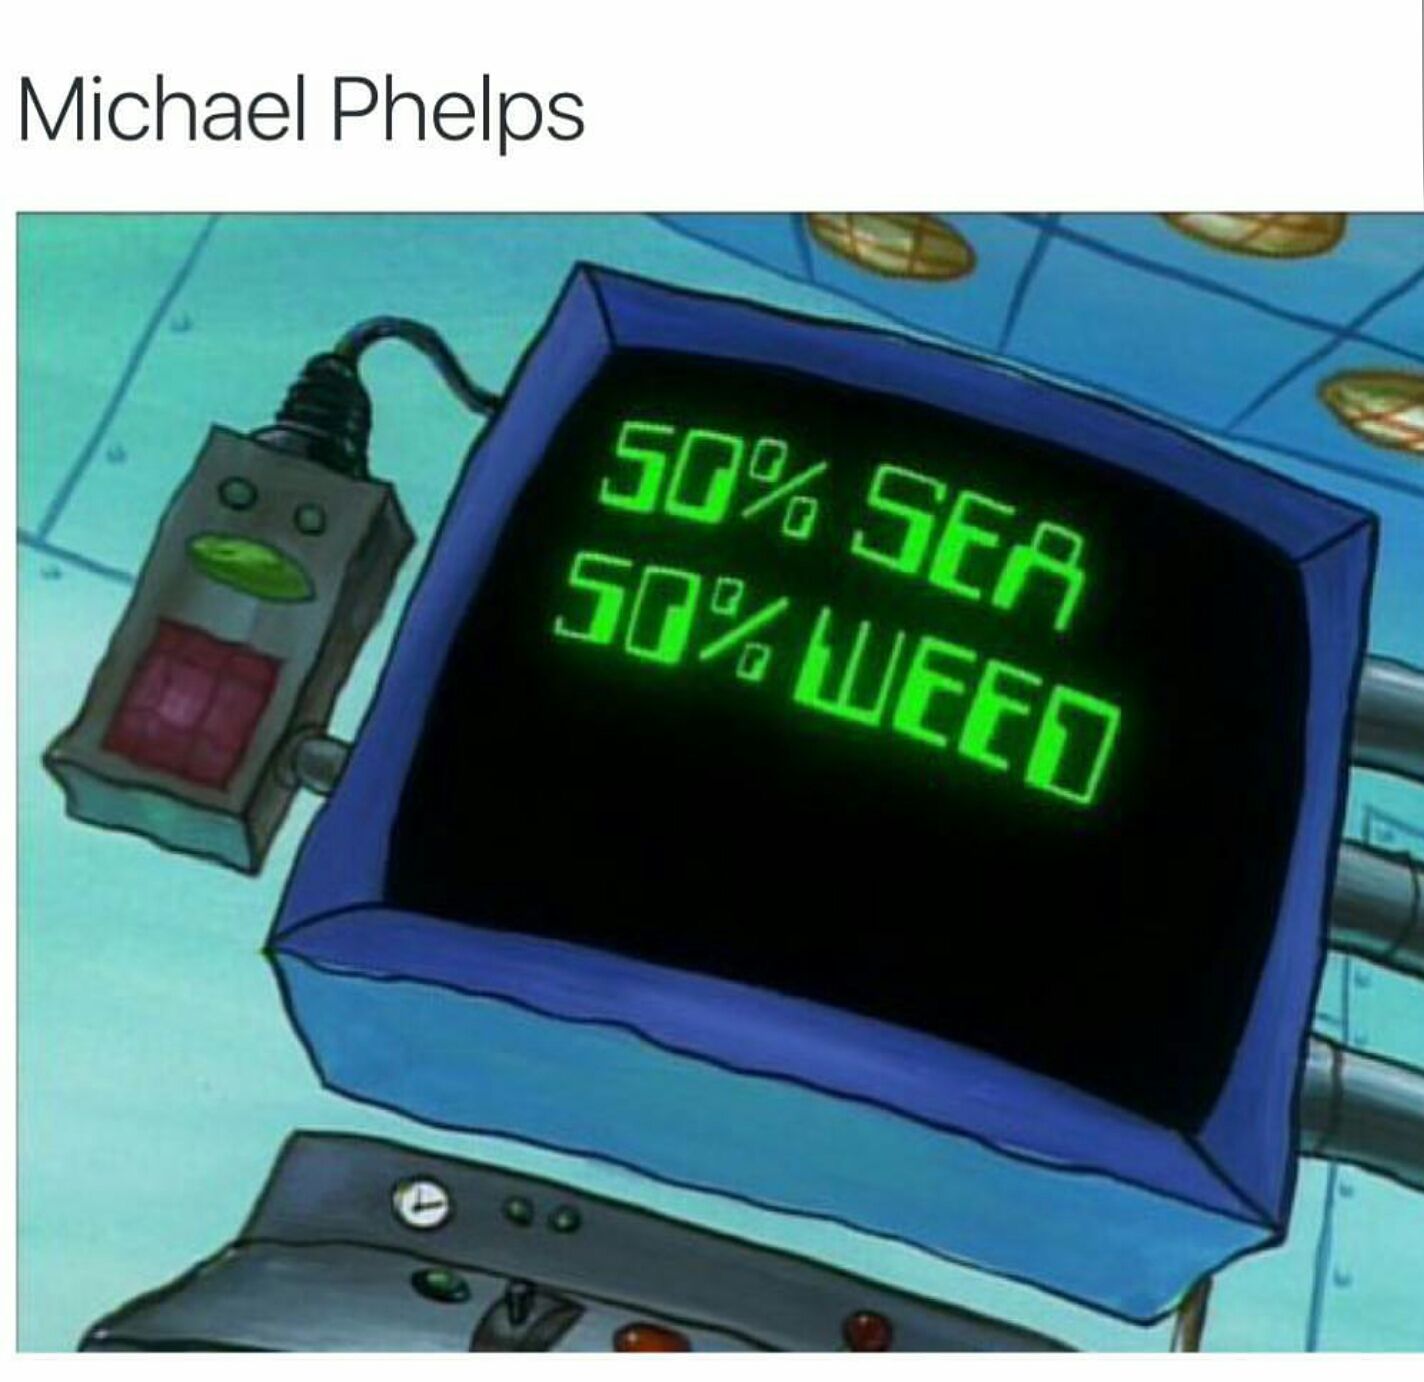 Plankton's analysis of Michael Phelps